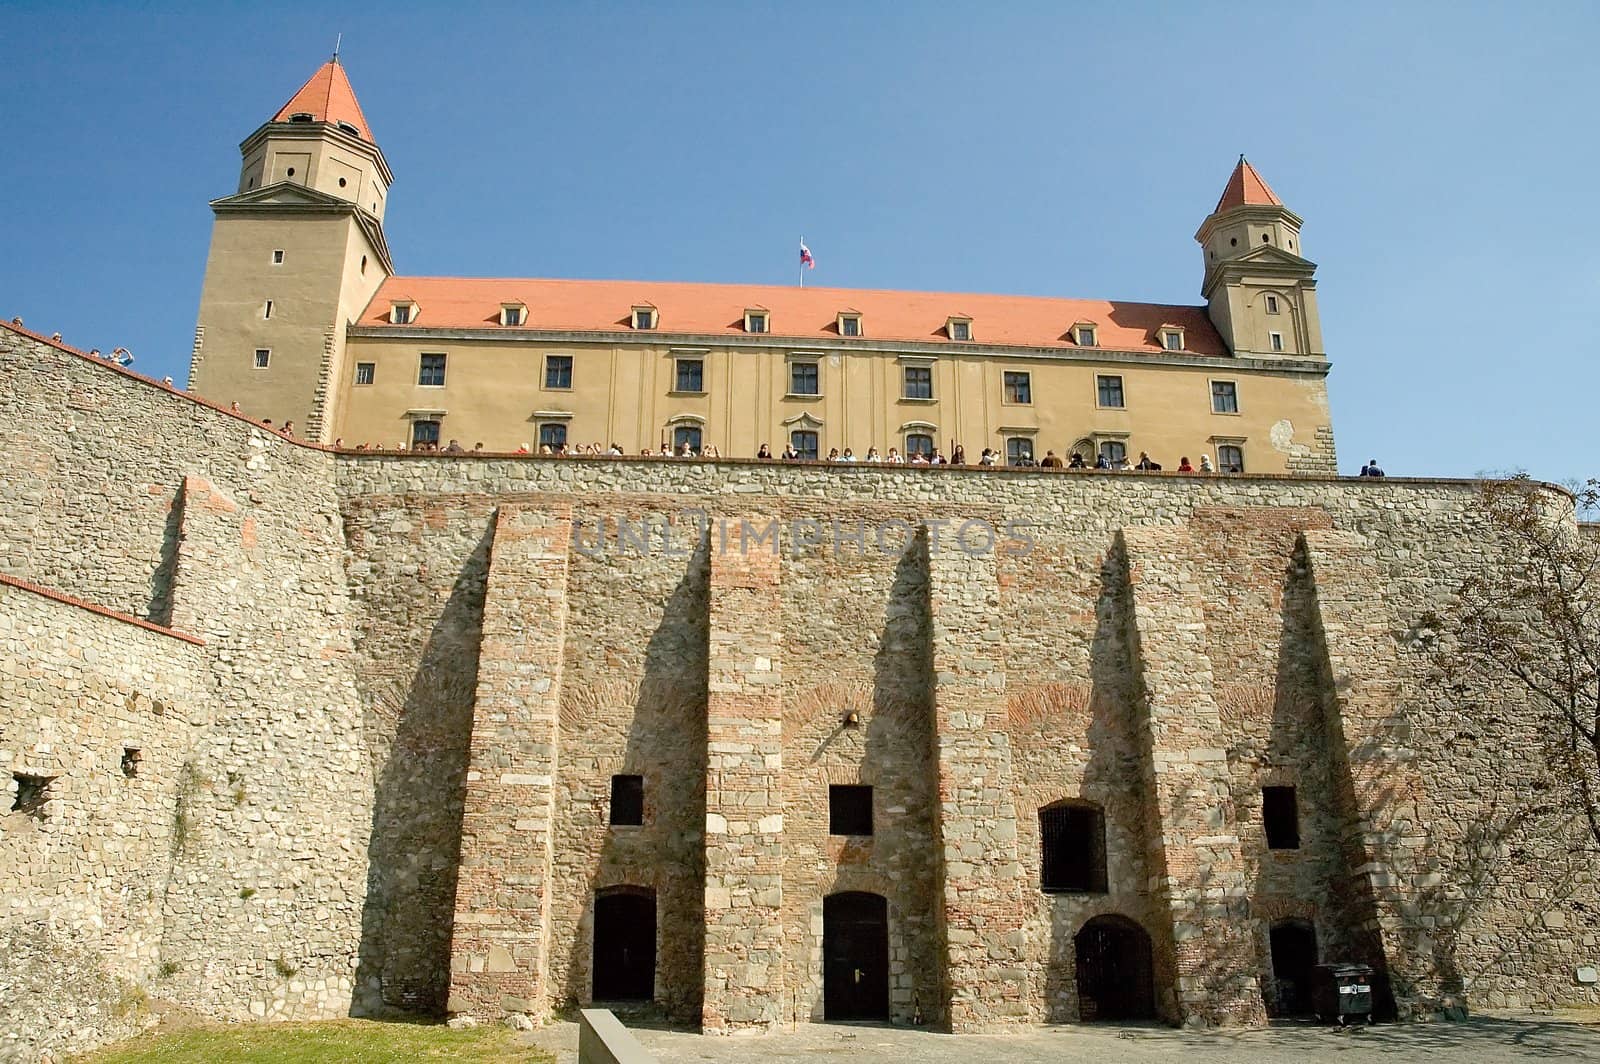 bratislava castle, several tourists, photo taken under city walls